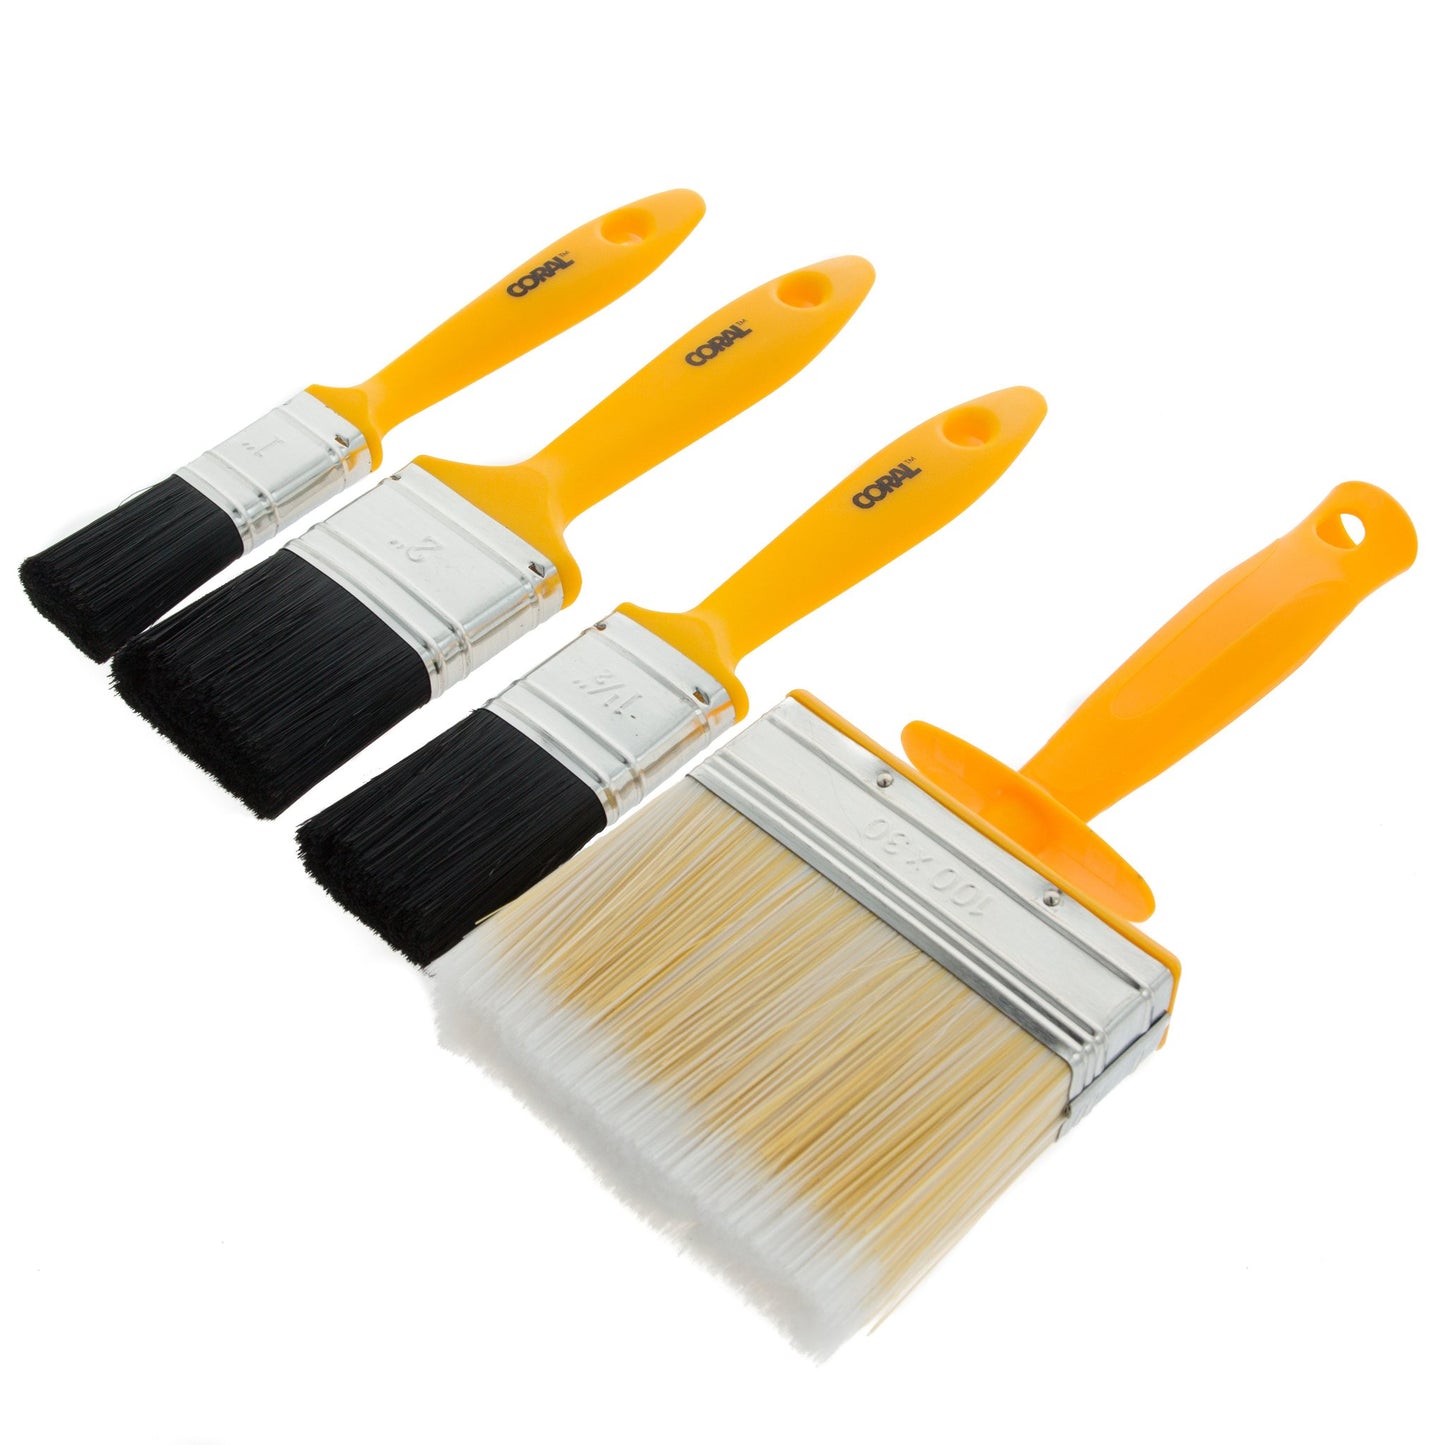 Essentials Paint & Paste Brush Set 4 piece